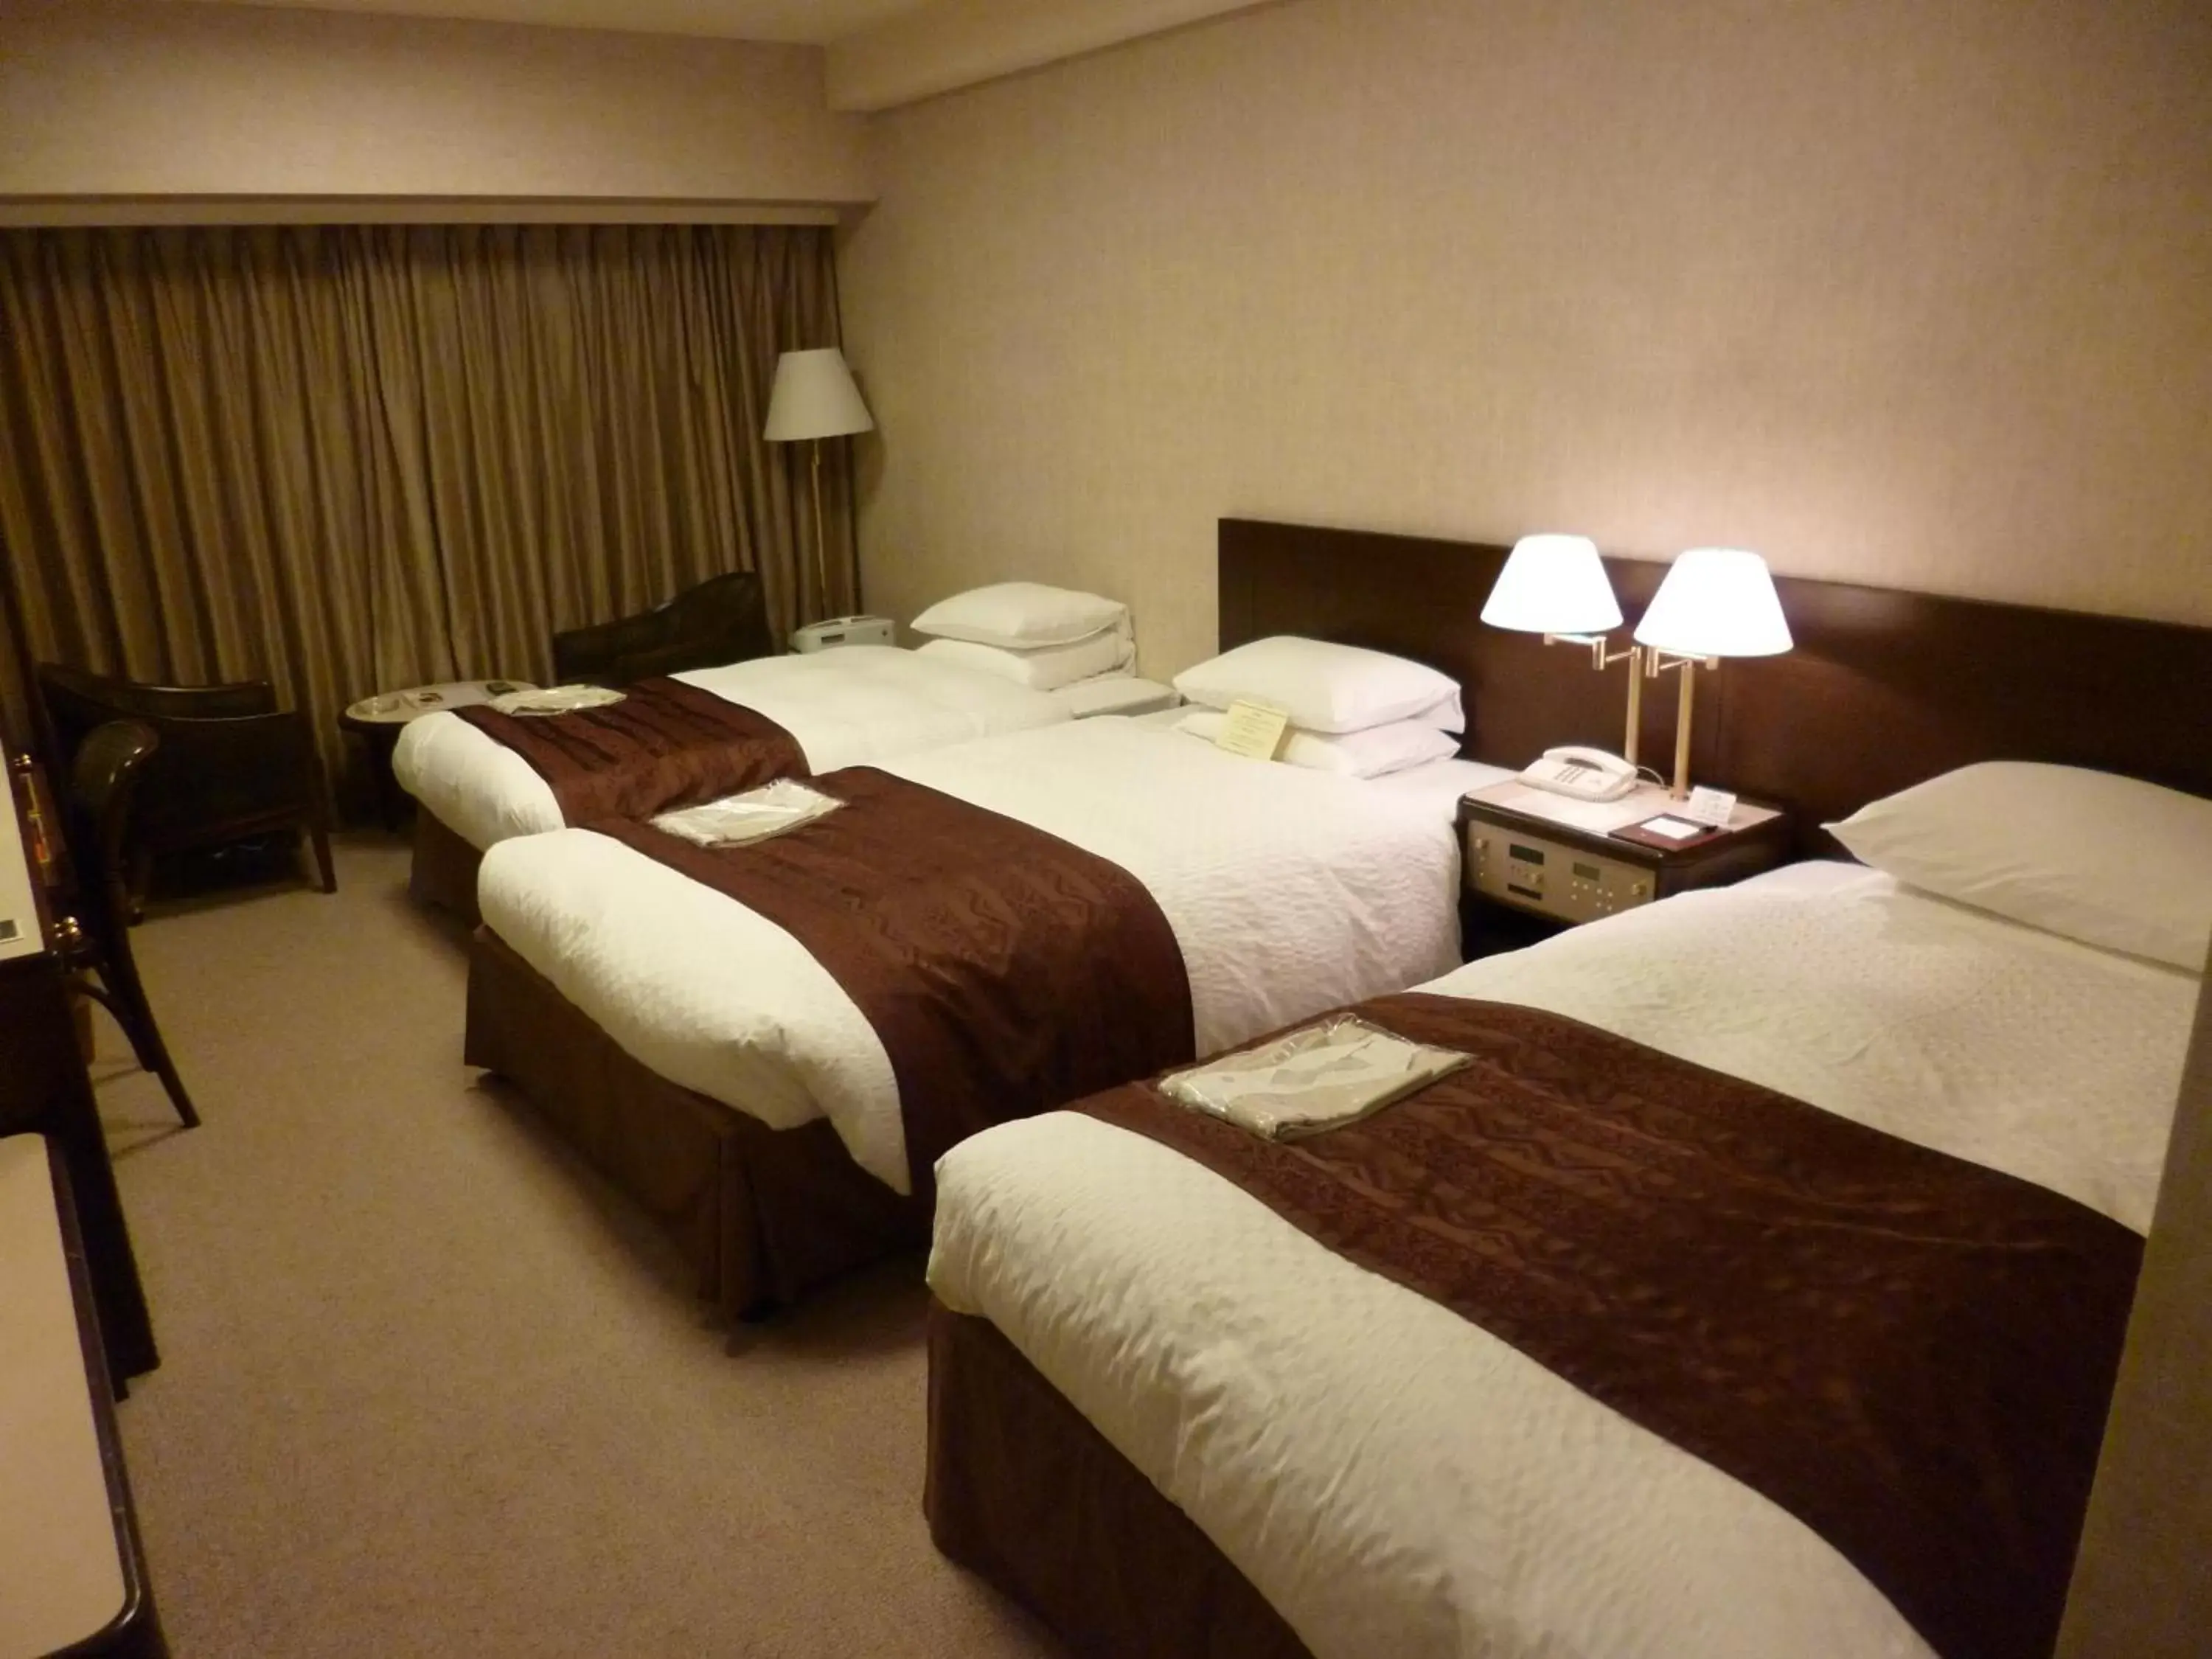 Bed, Room Photo in Hotel New Nagasaki